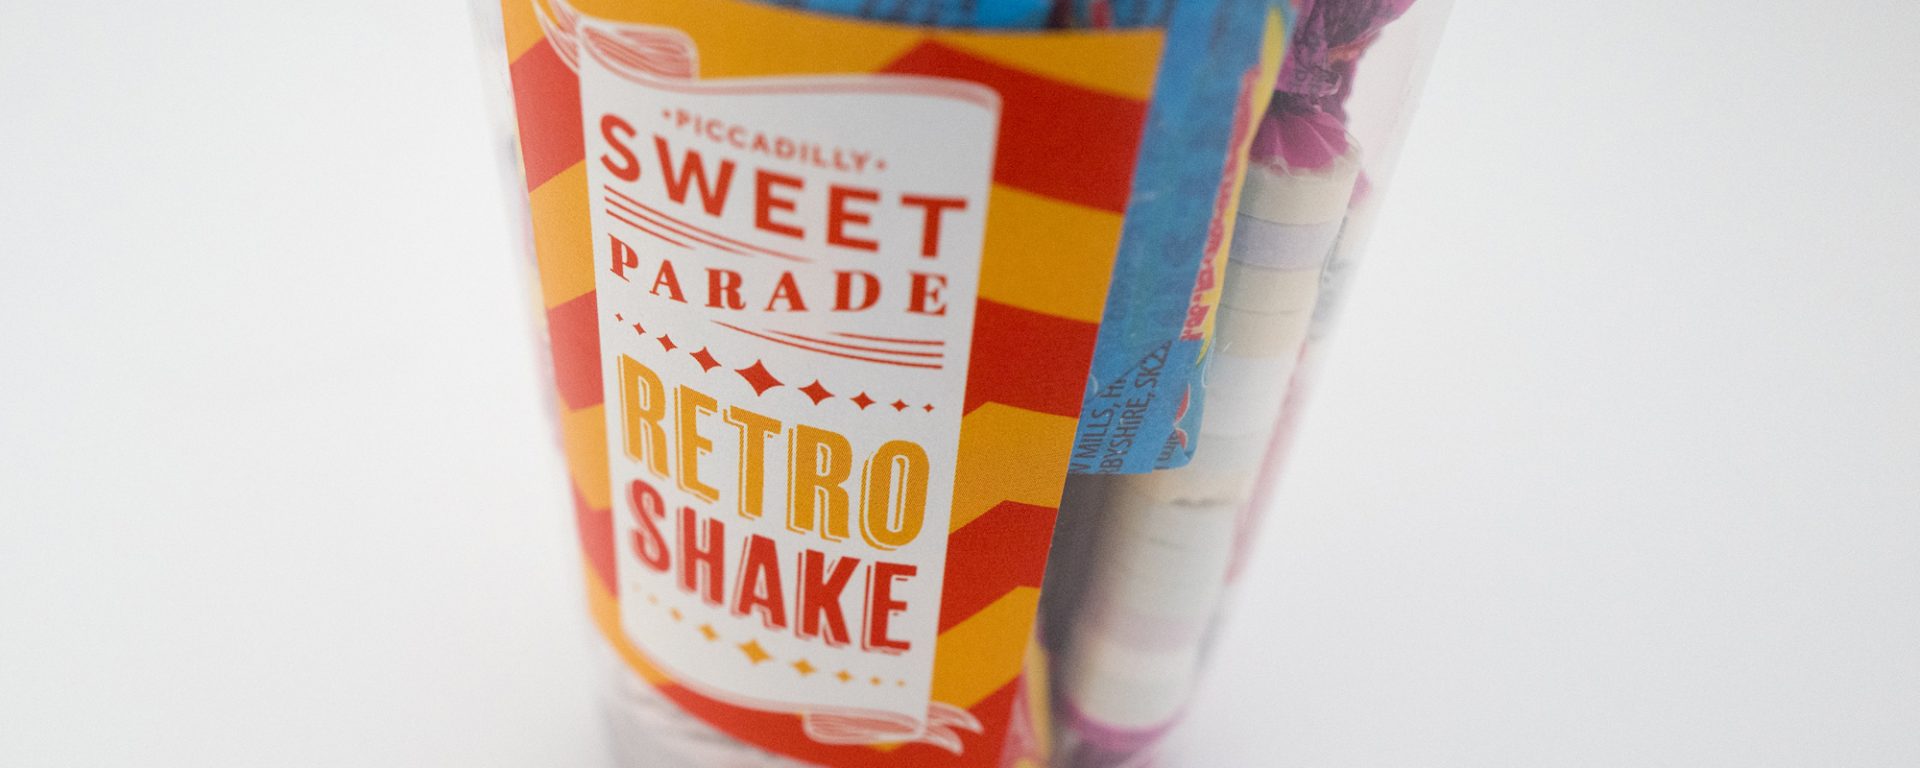 Piccadilly sweet parade - Retro shake